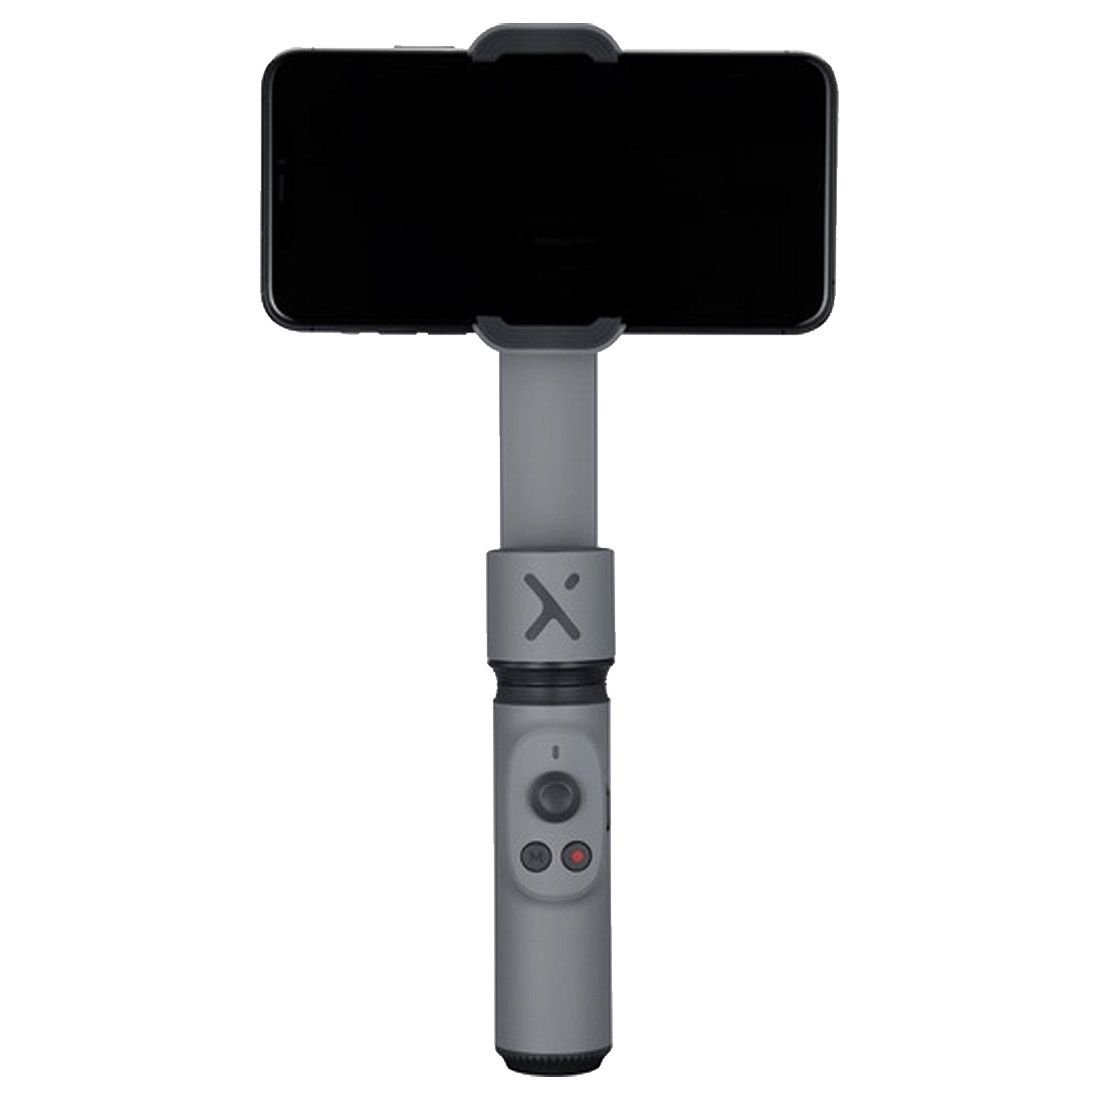 Zhiyun Smooth X Foldable Smartphone Gimbal Stabilizer - Gray ZHIYUN